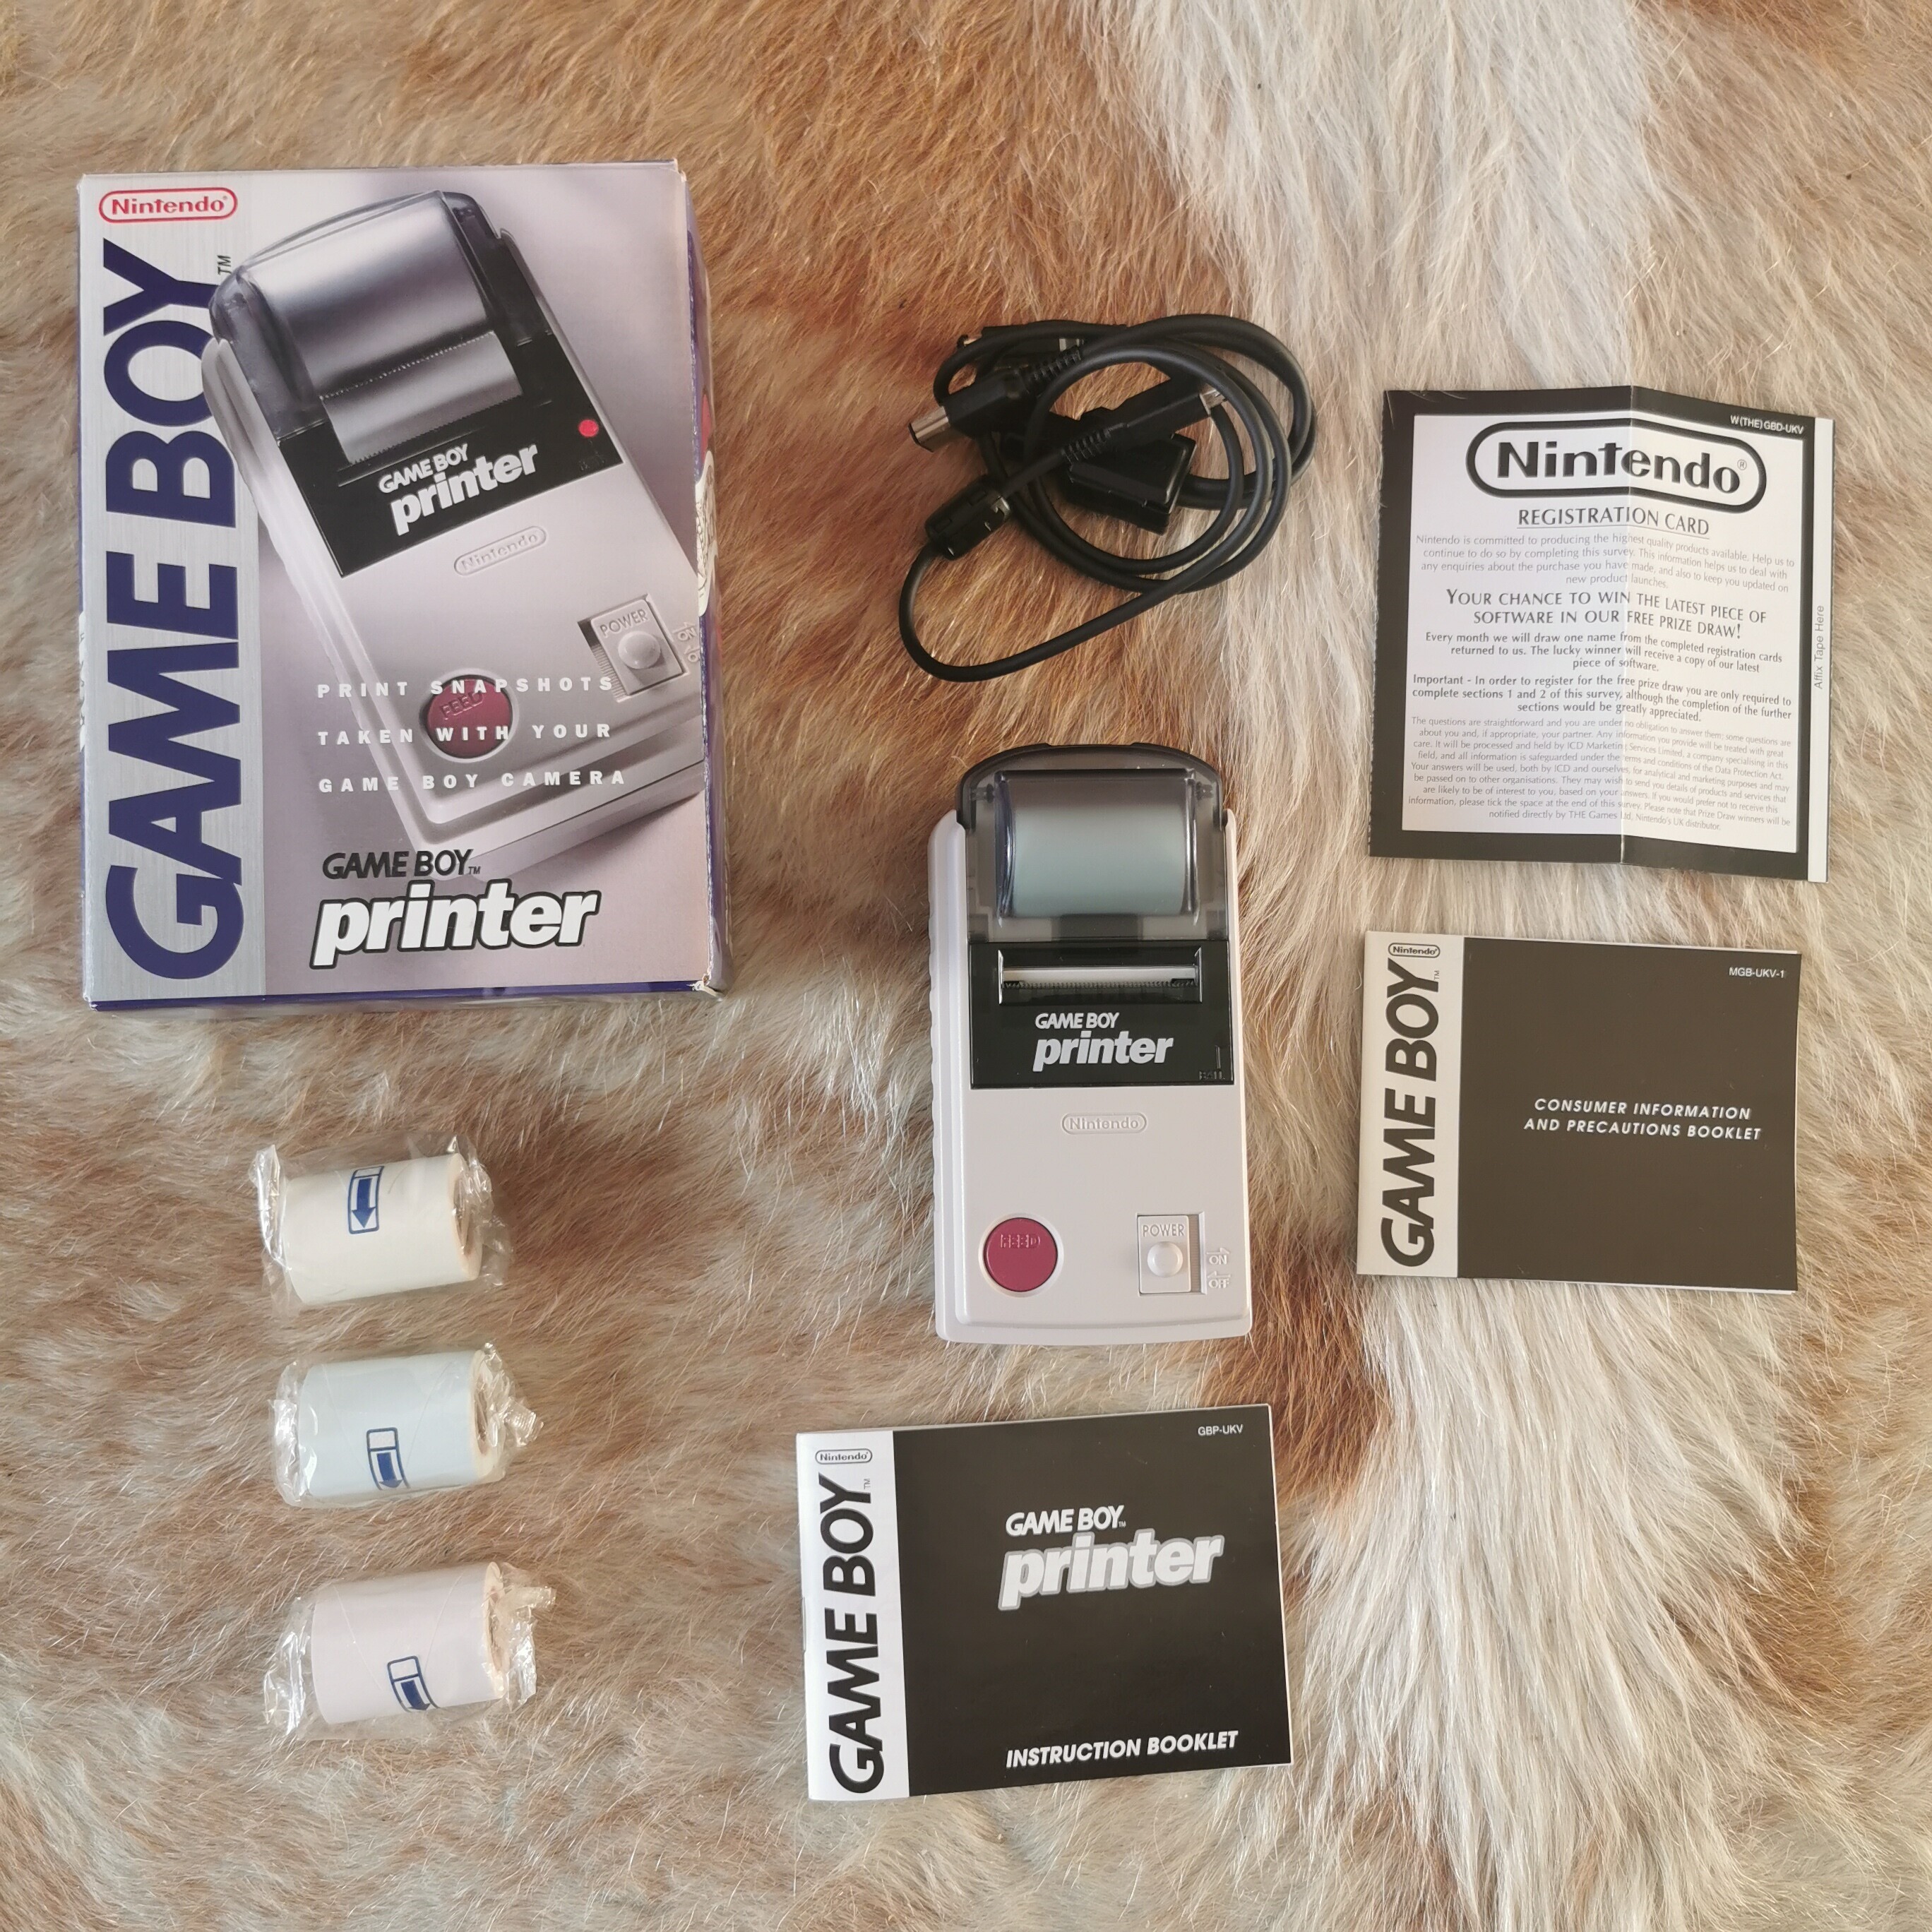  Nintendo Game Boy Printer